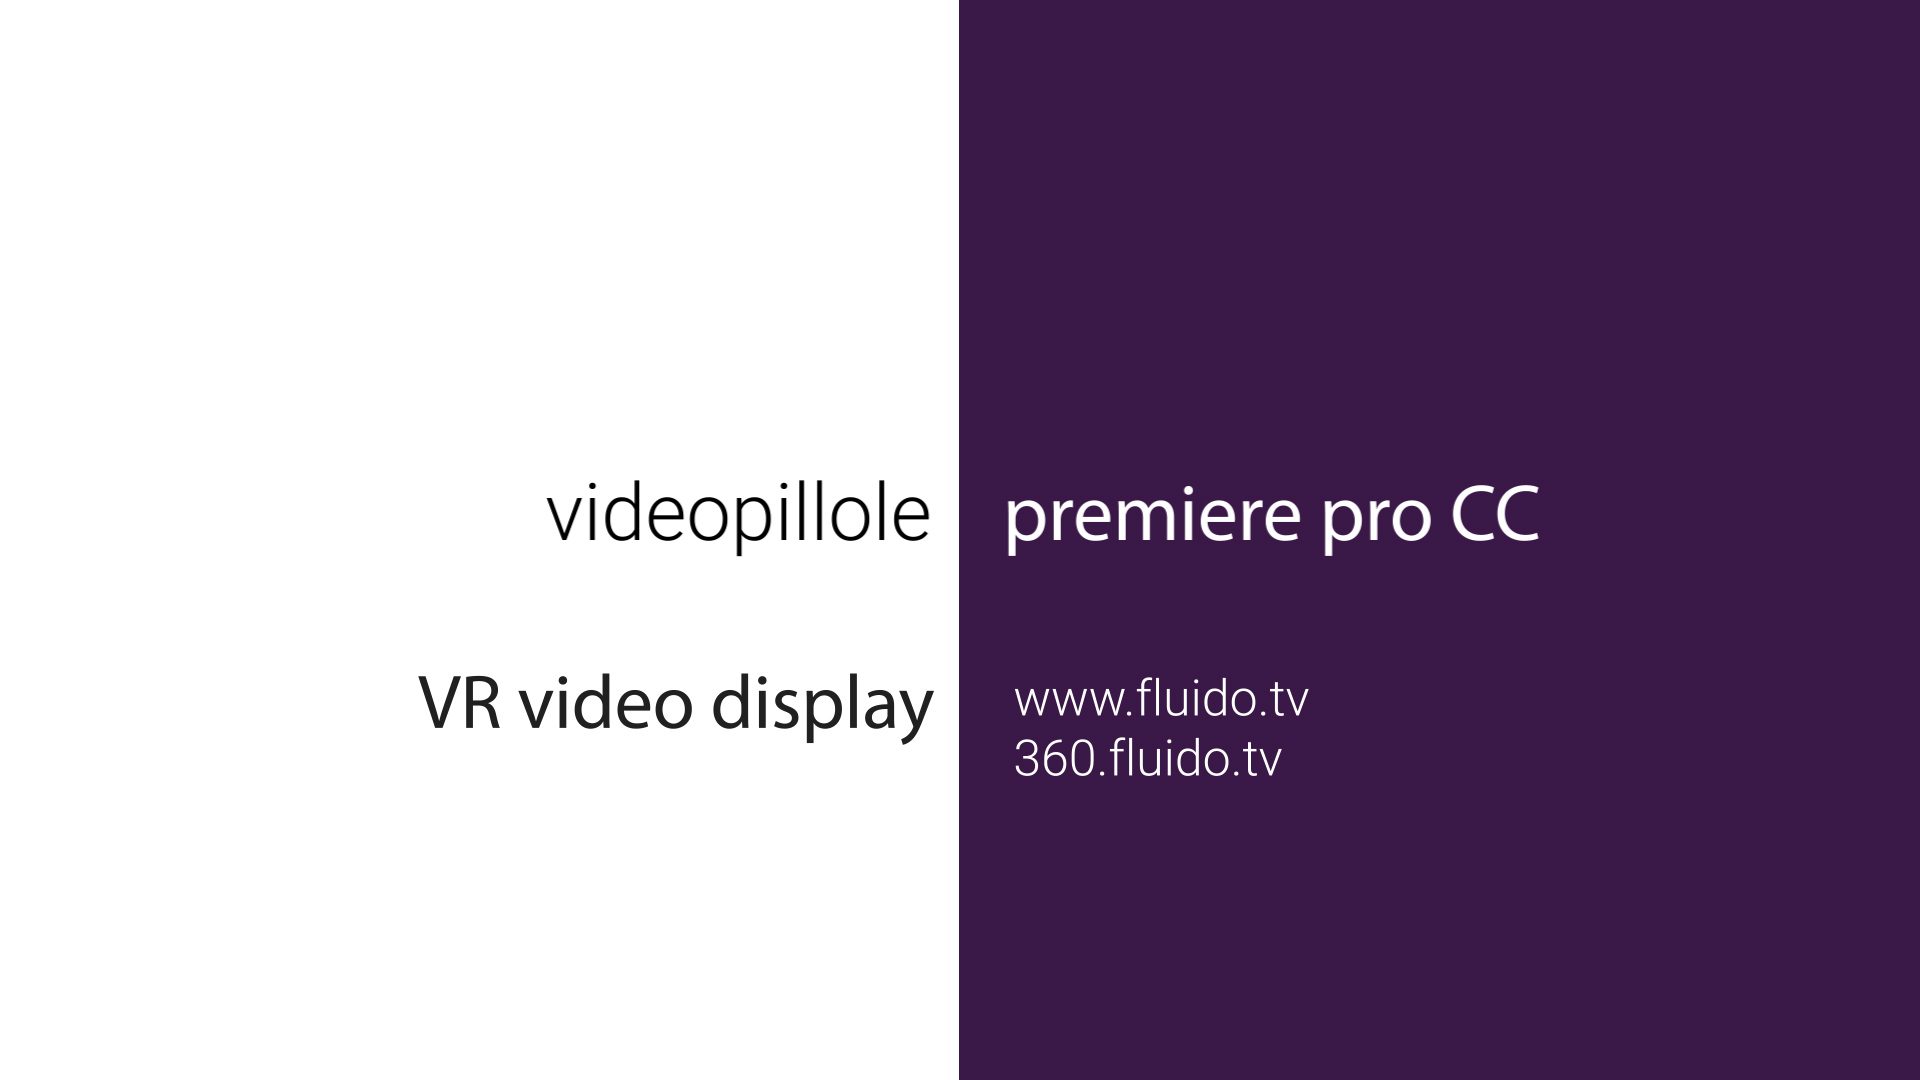 Premiere Pro CC – VR video display